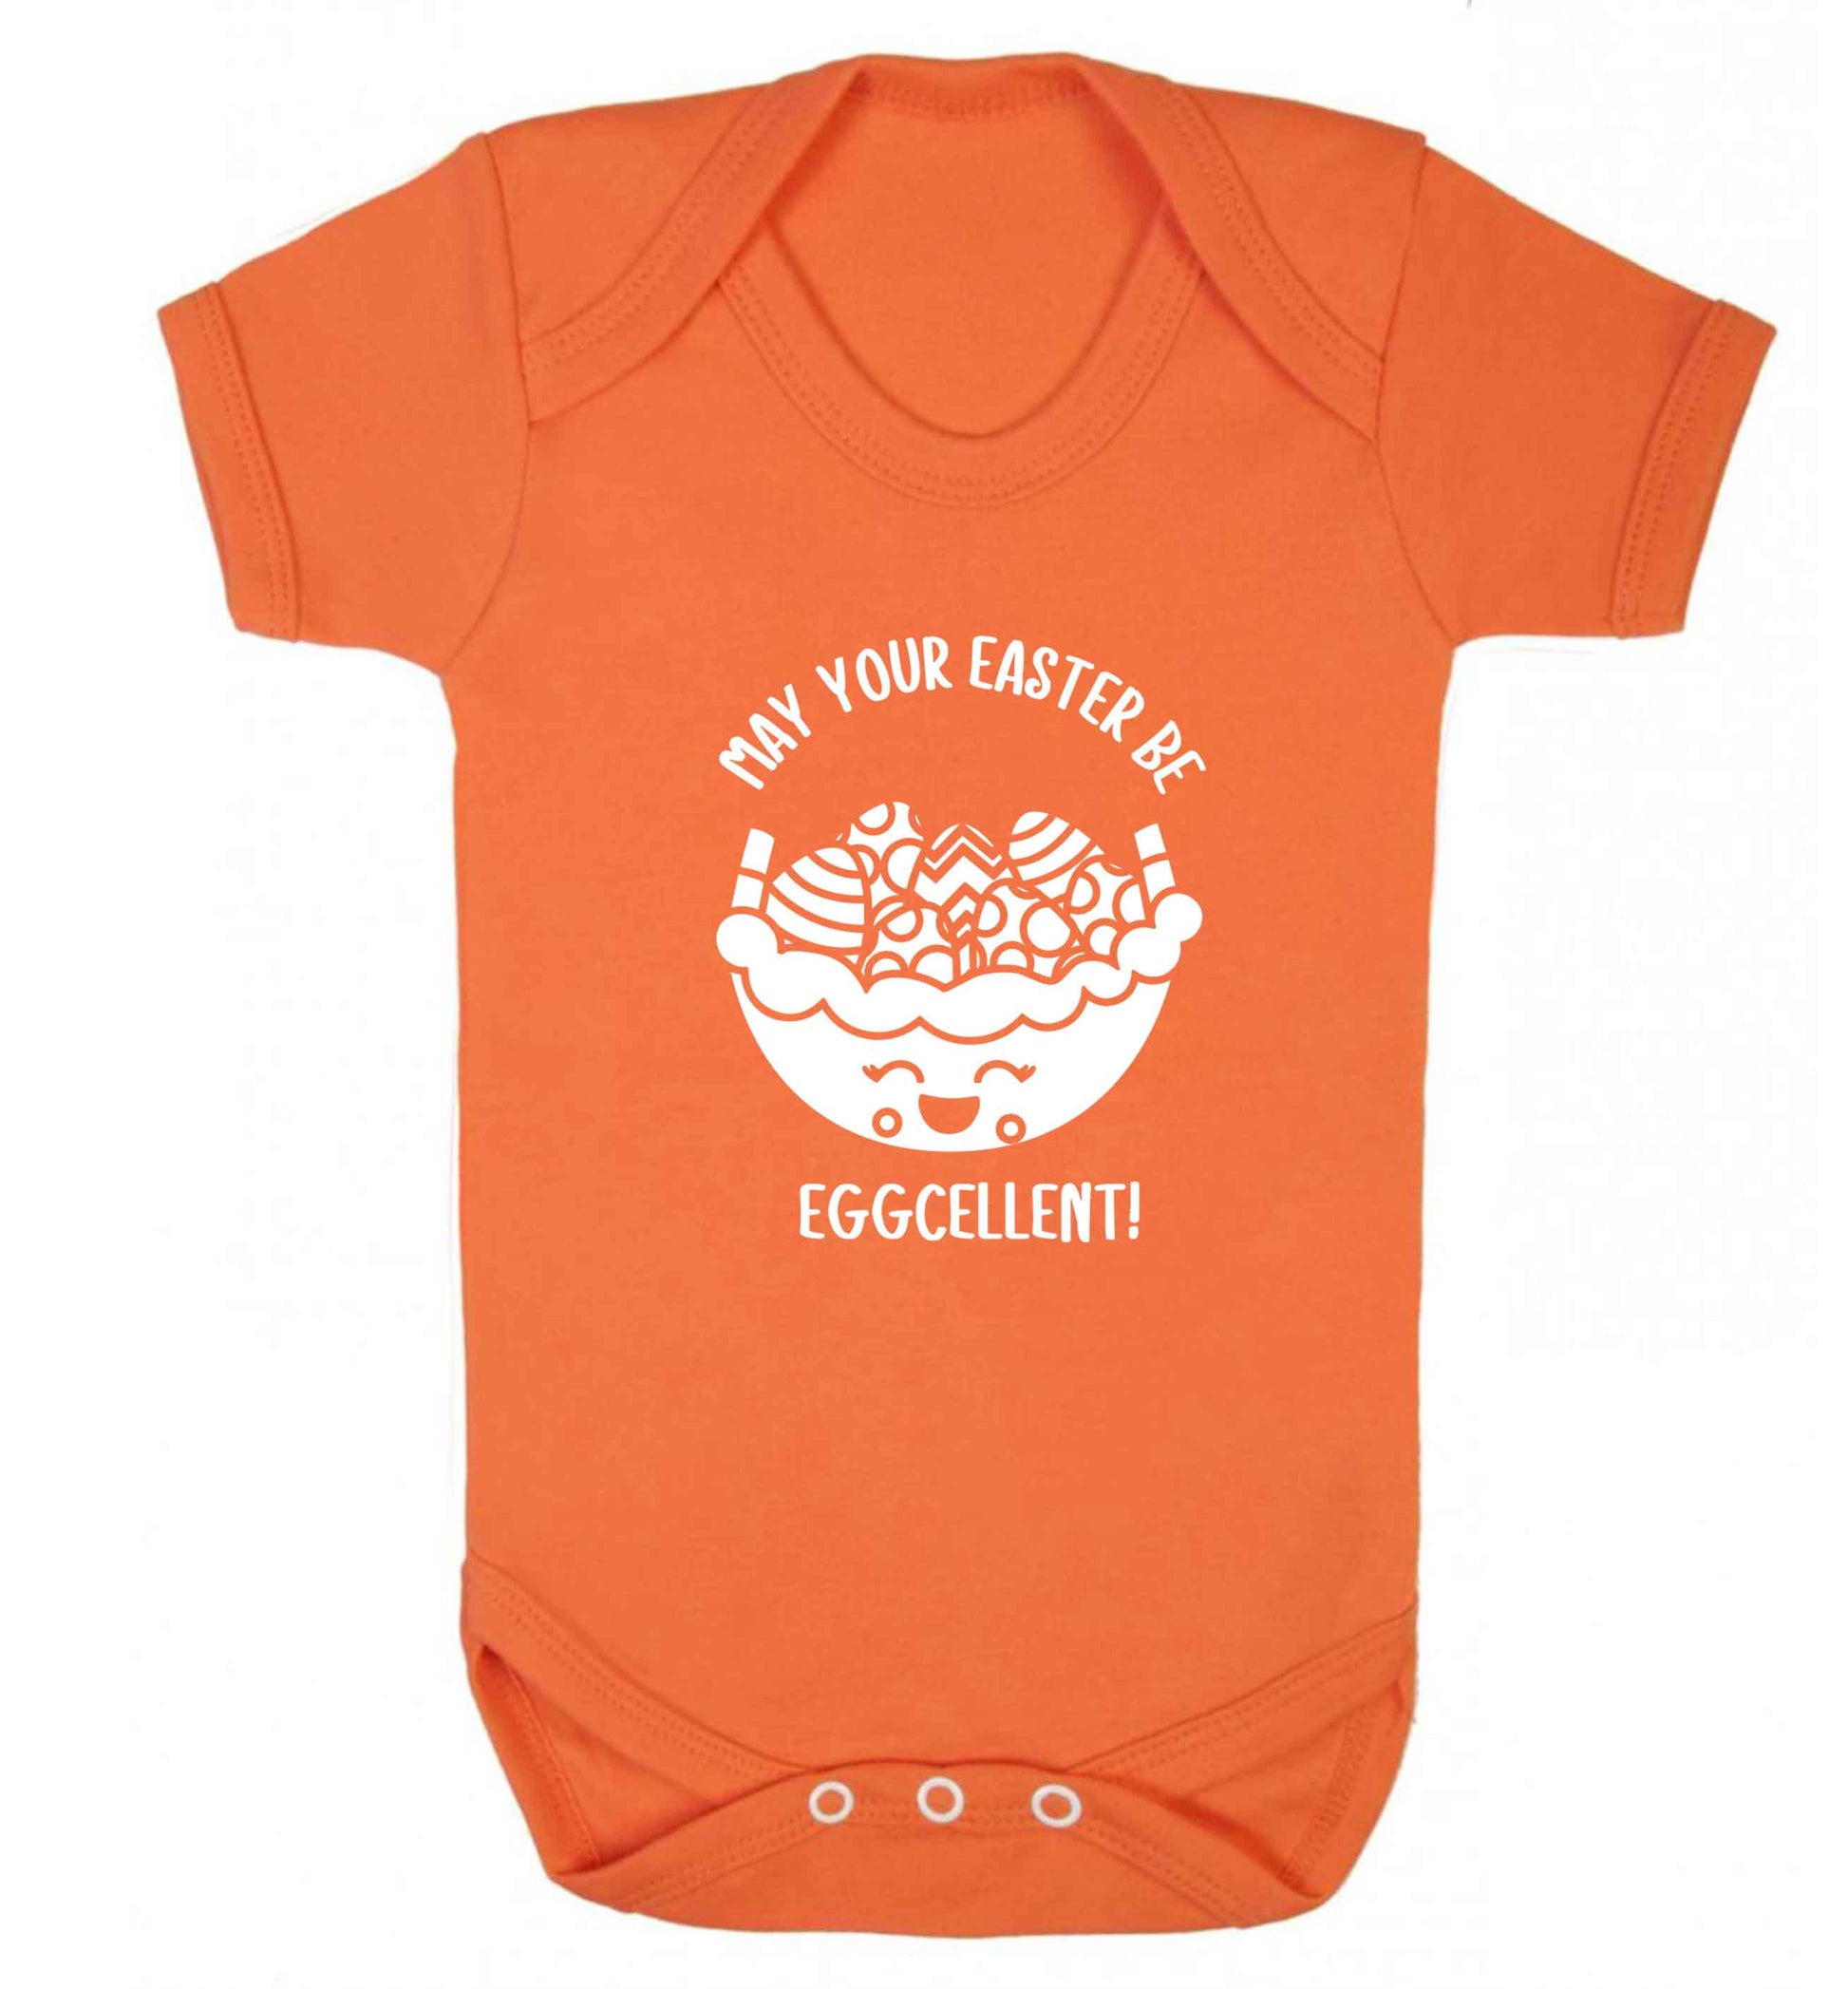 May your Easter be eggcellent baby vest orange 18-24 months